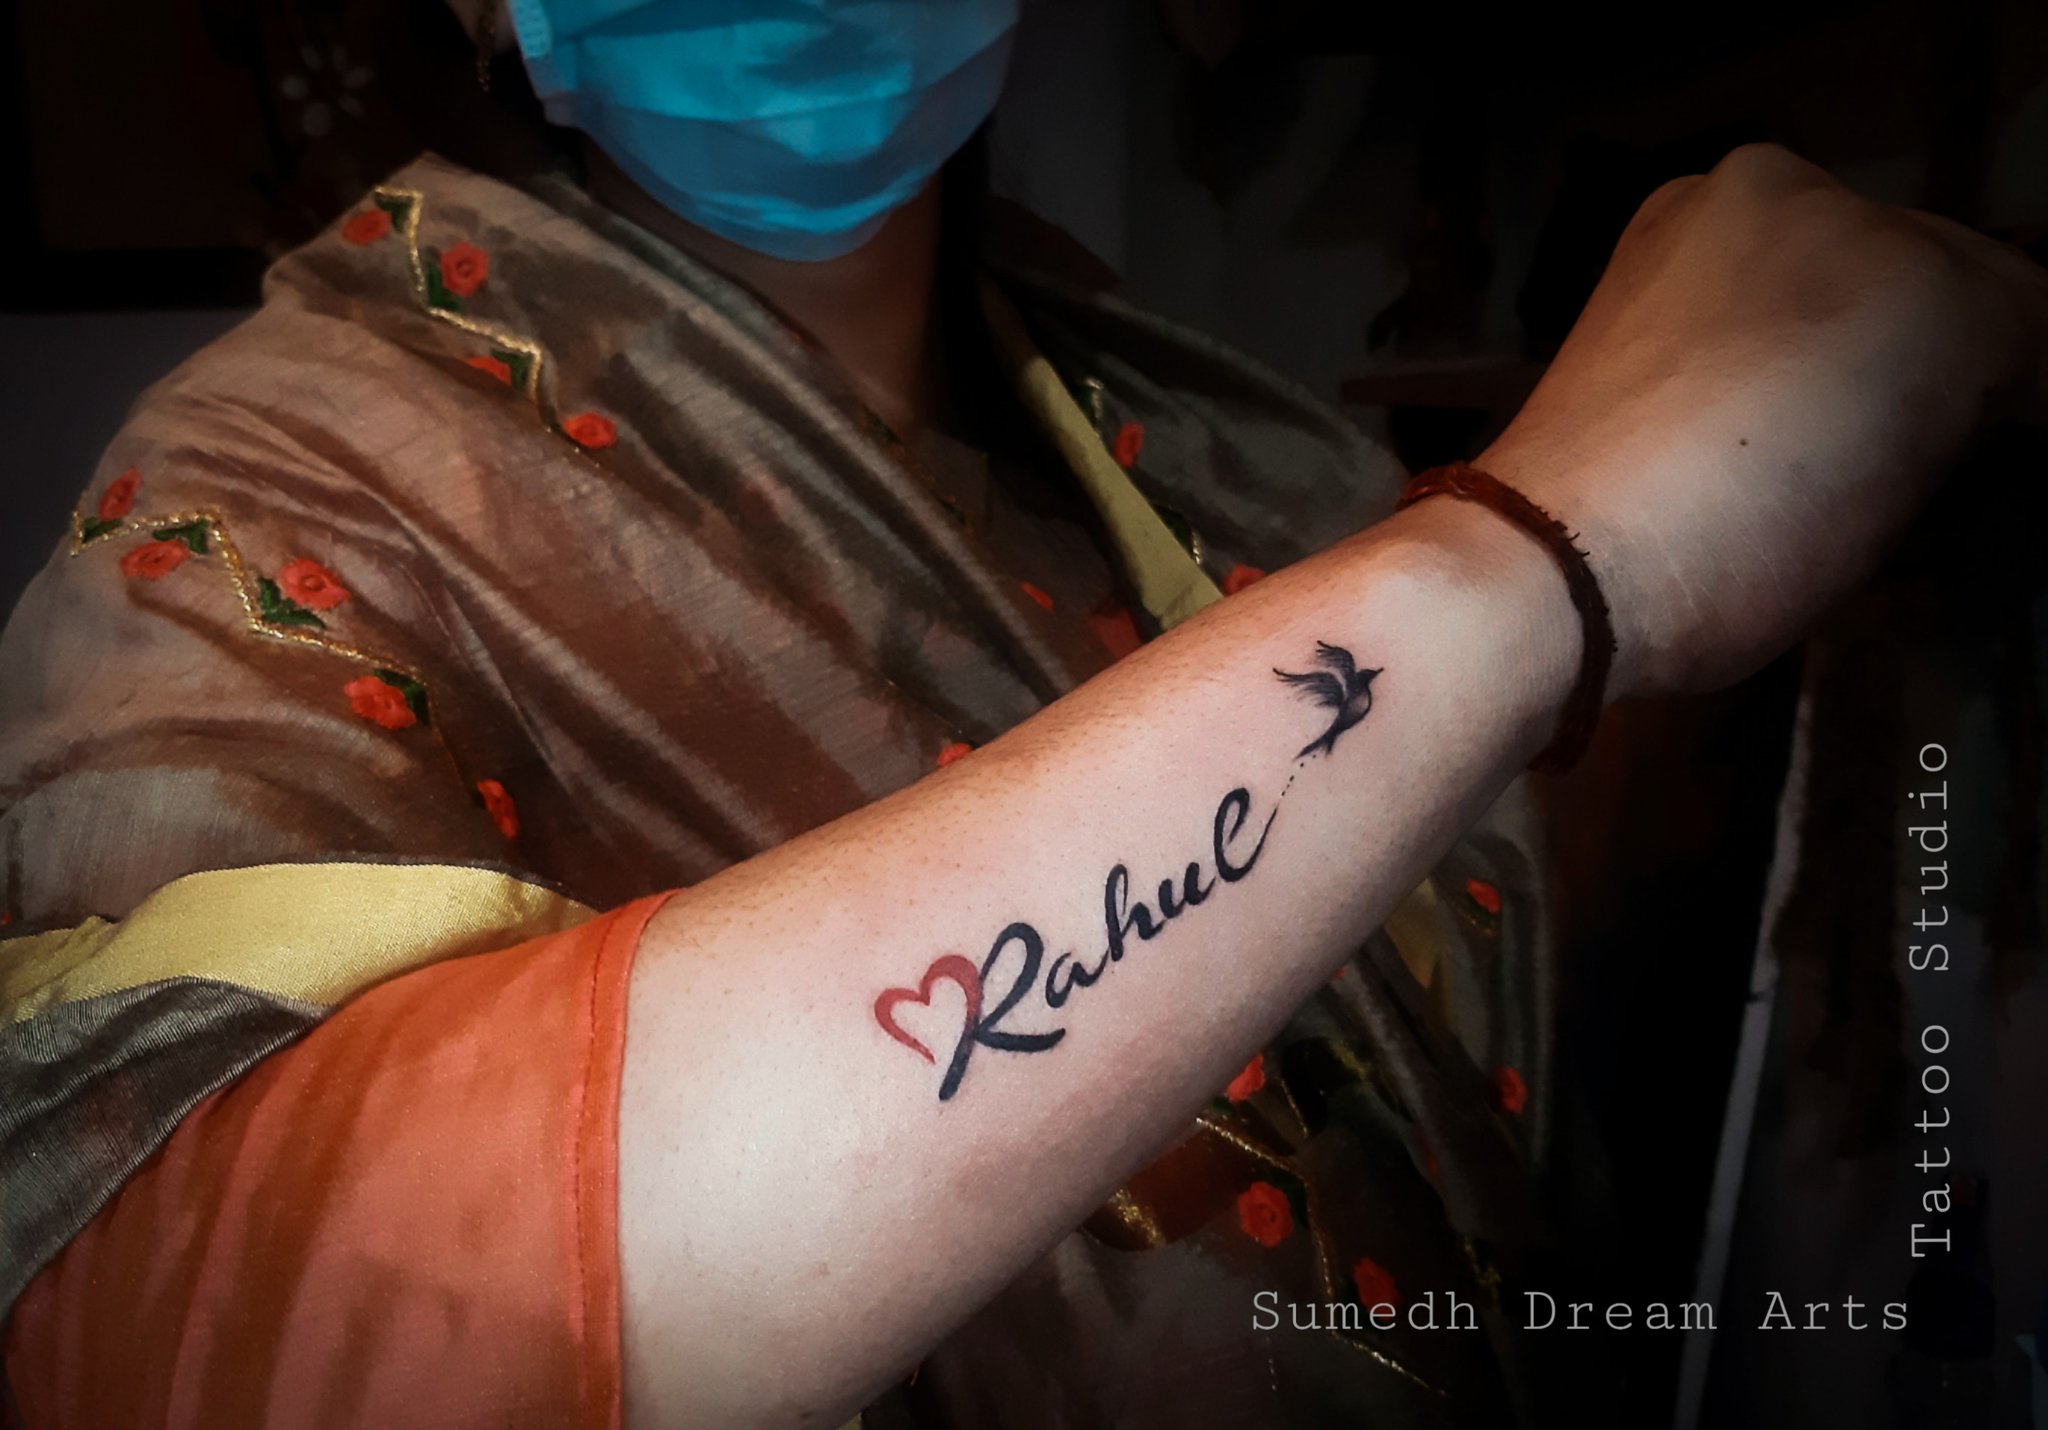 sumedhdreamarts on Twitter Rahul name Tattoo design BySumedh Dream  Arts amp Tattoo Studio httpstcoD6RdhEvory  Twitter